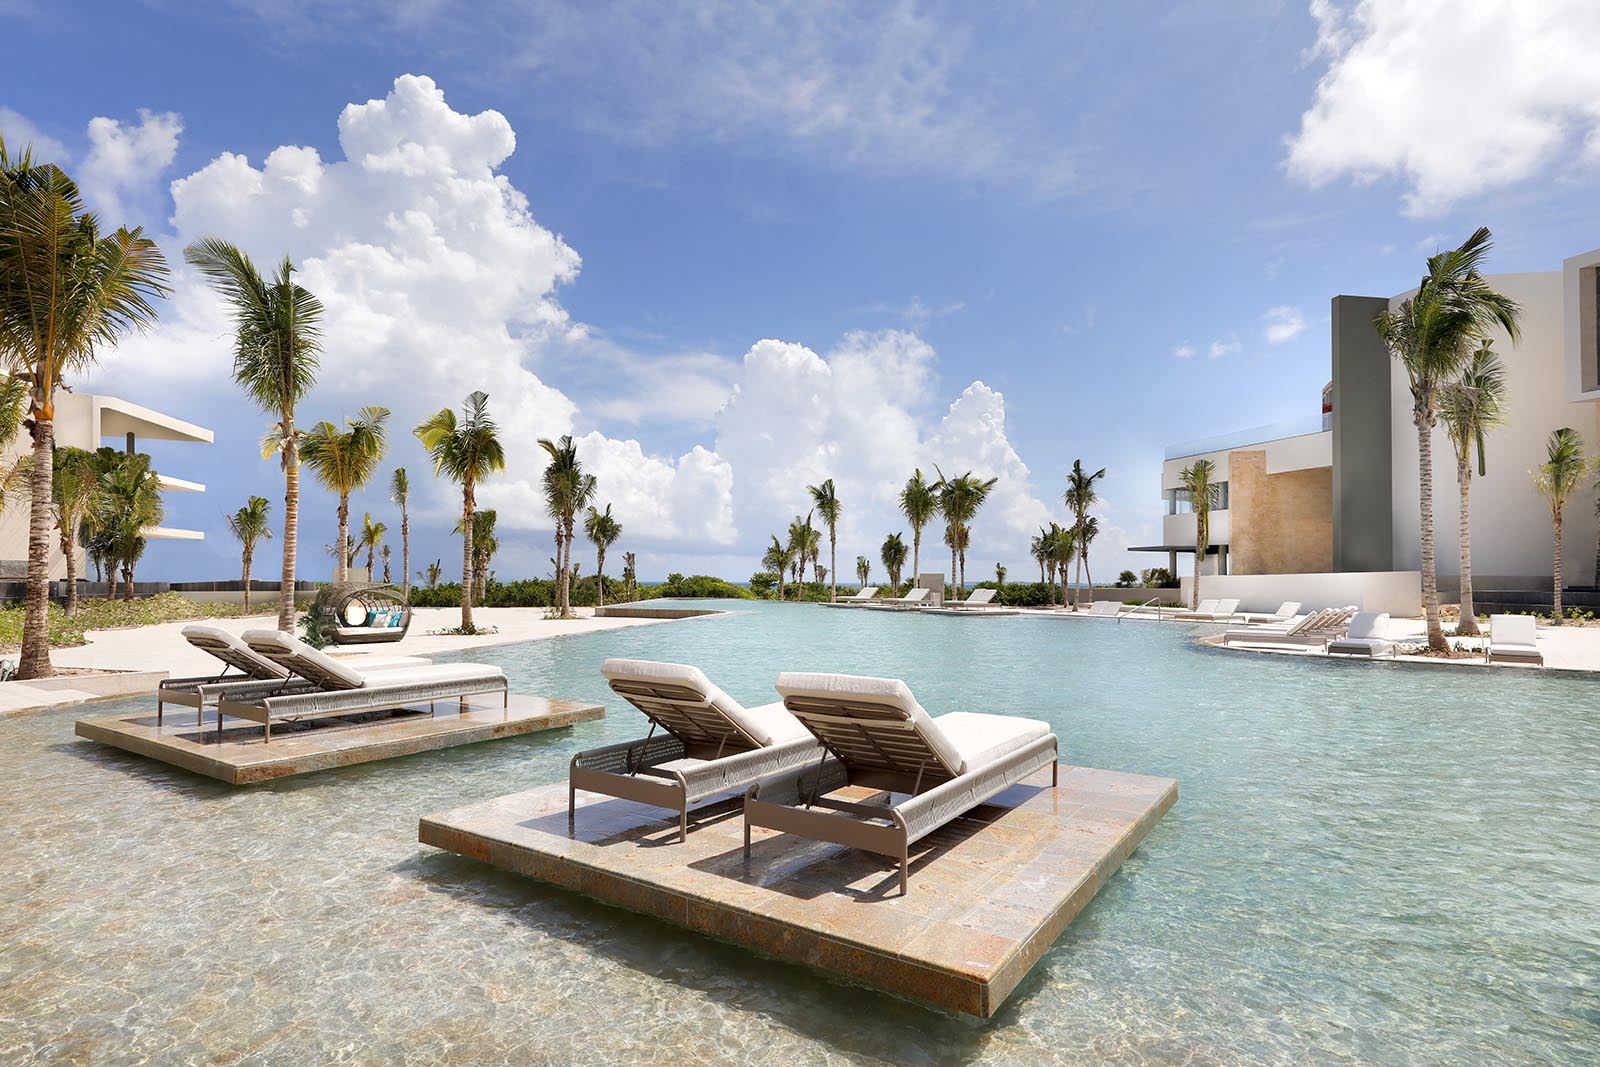 Resort de luxo em Cancún: confira fotos do TRS Coral Hotel